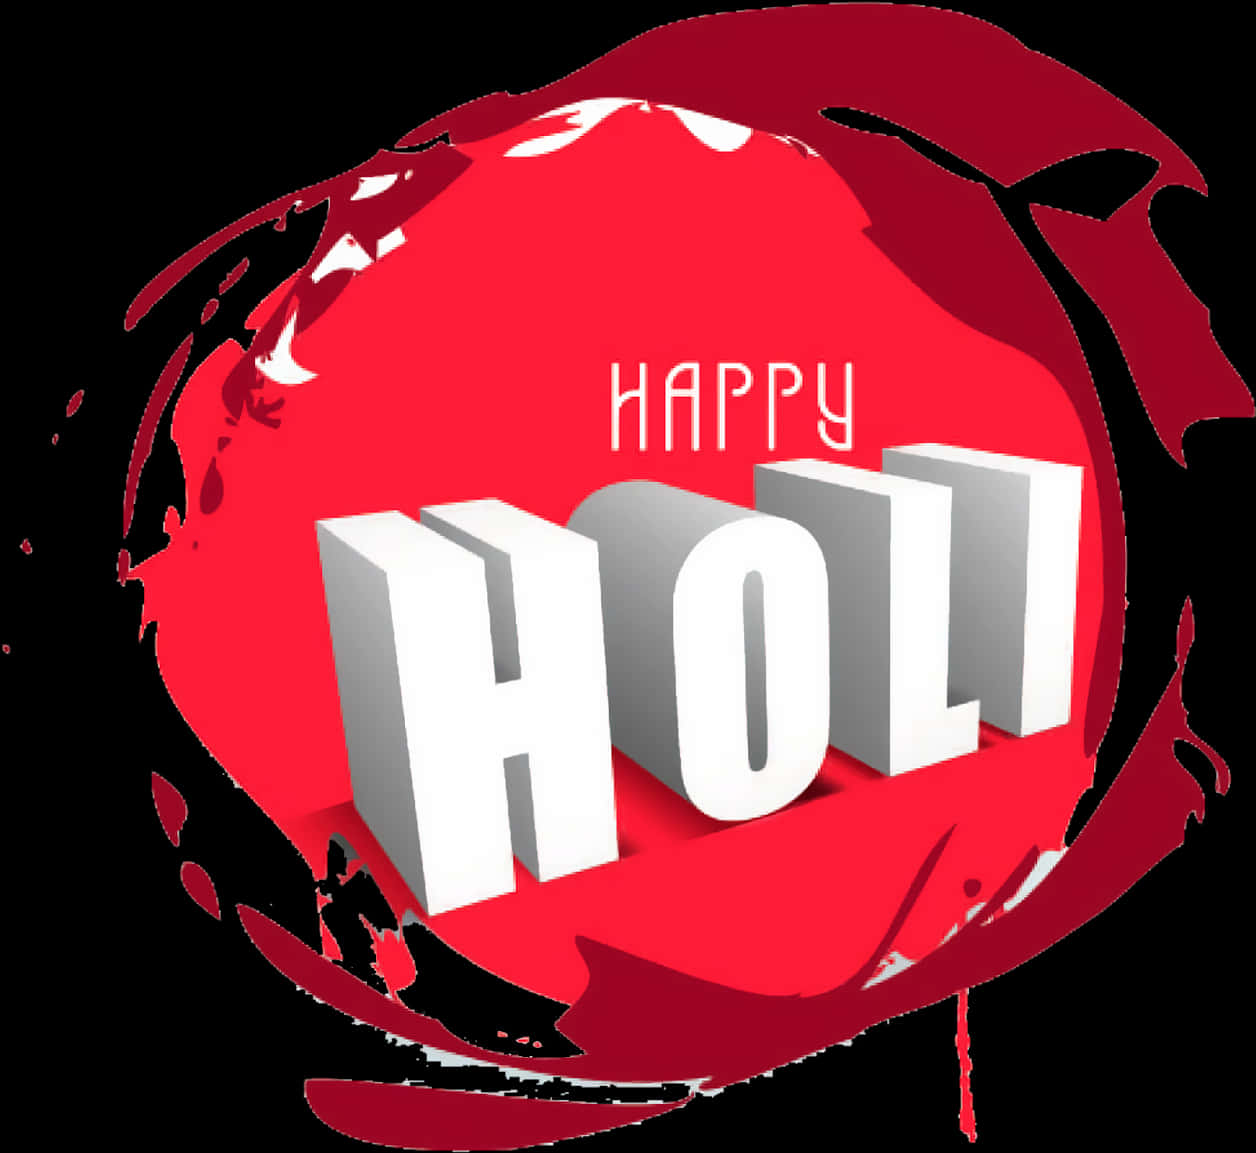 Happy Holi3 D Text Celebration